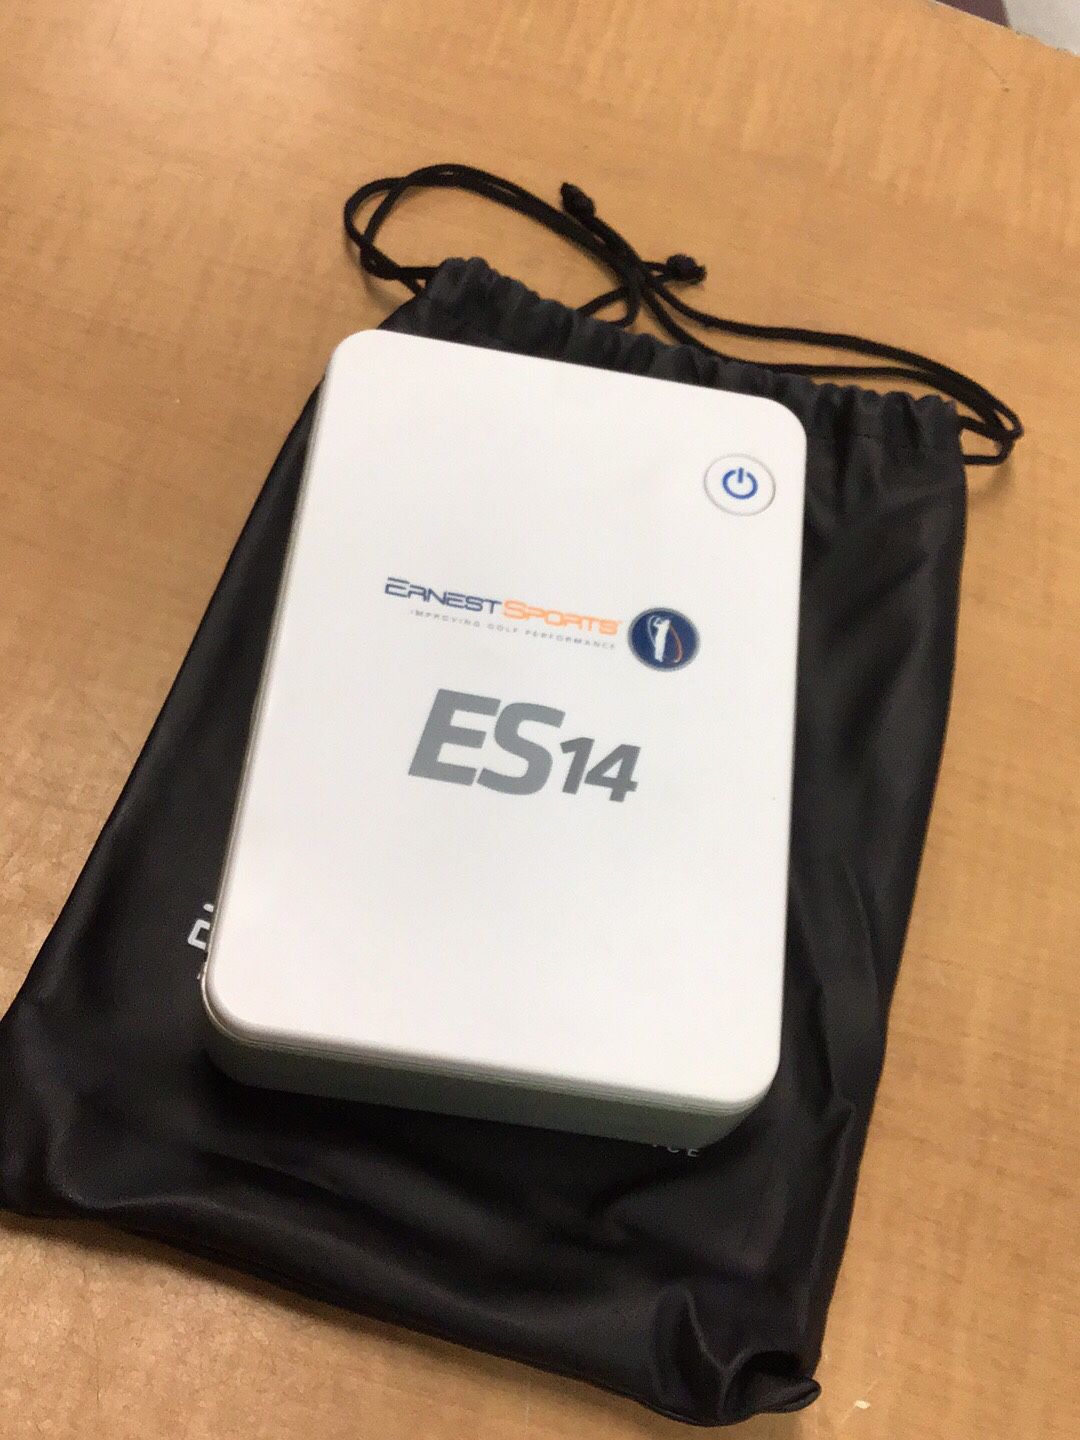 Ernest Sports es14 portable golf launch monitor